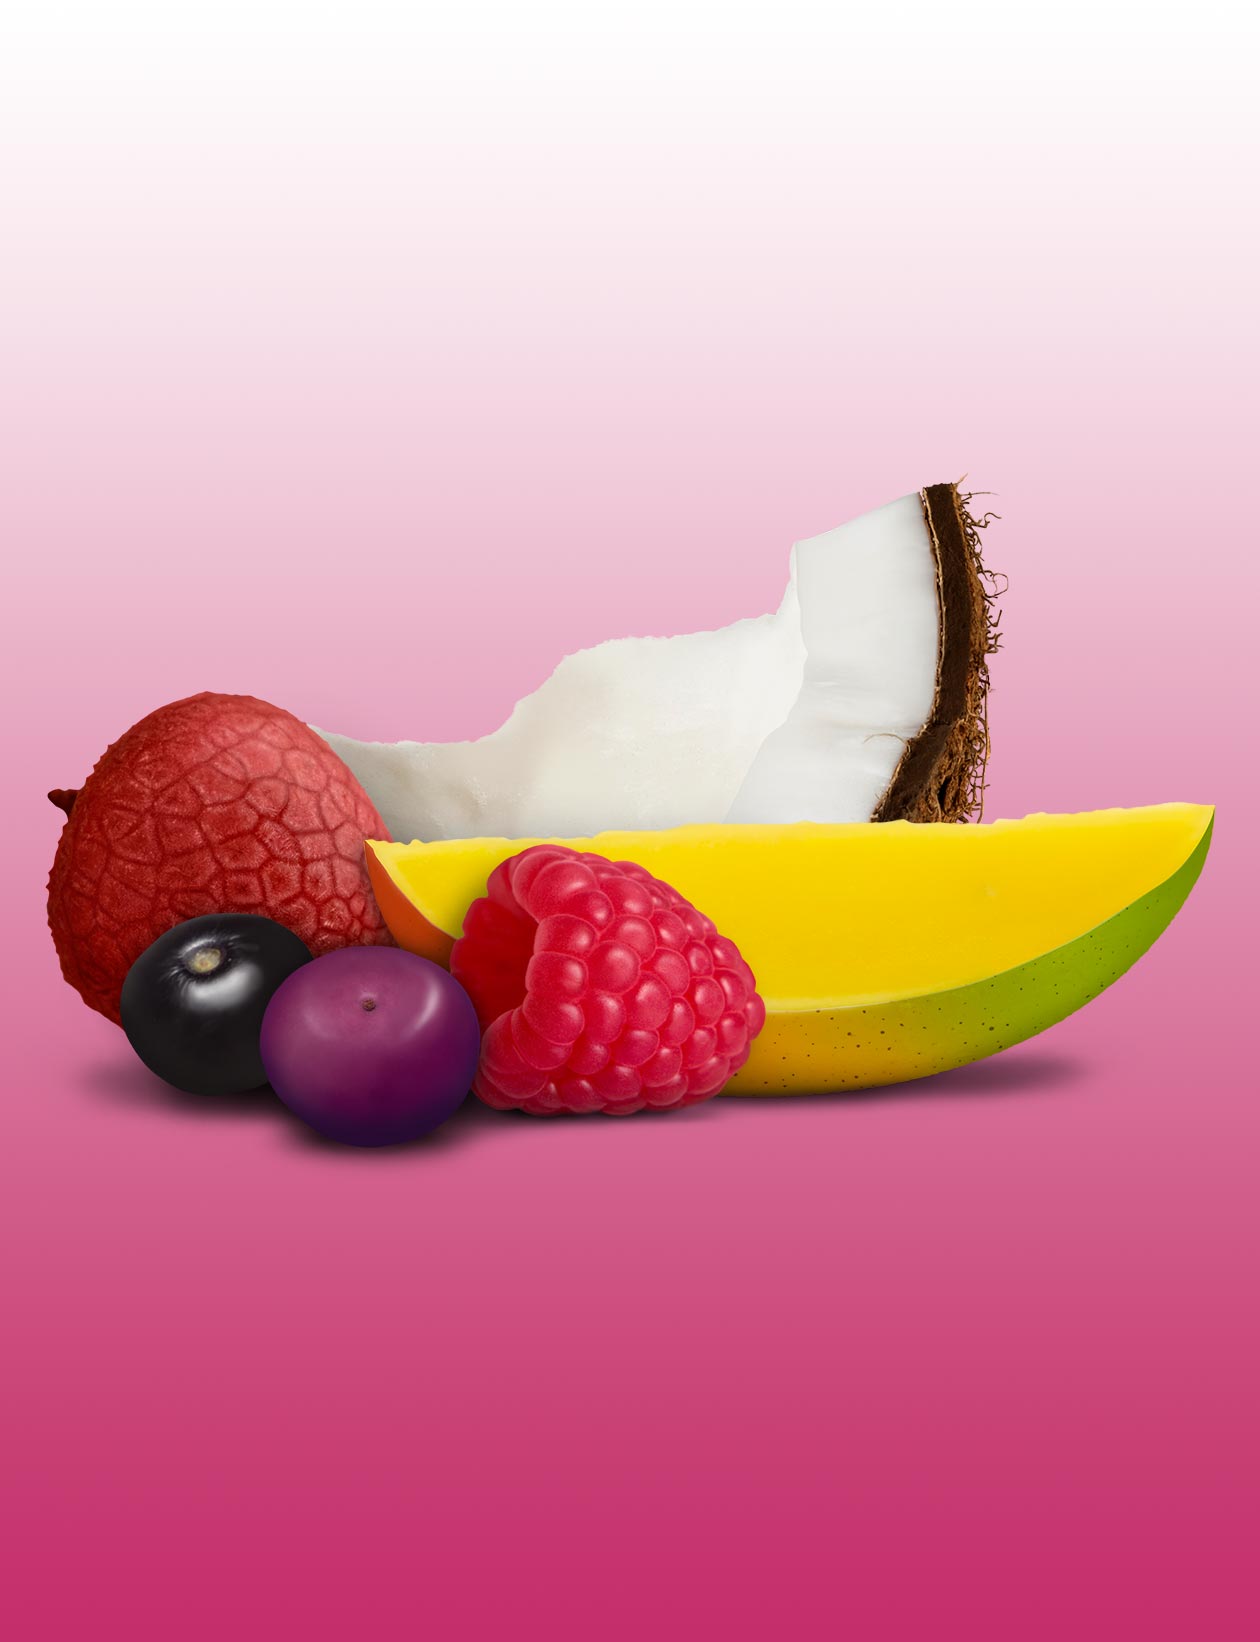 Superfruit Illustration